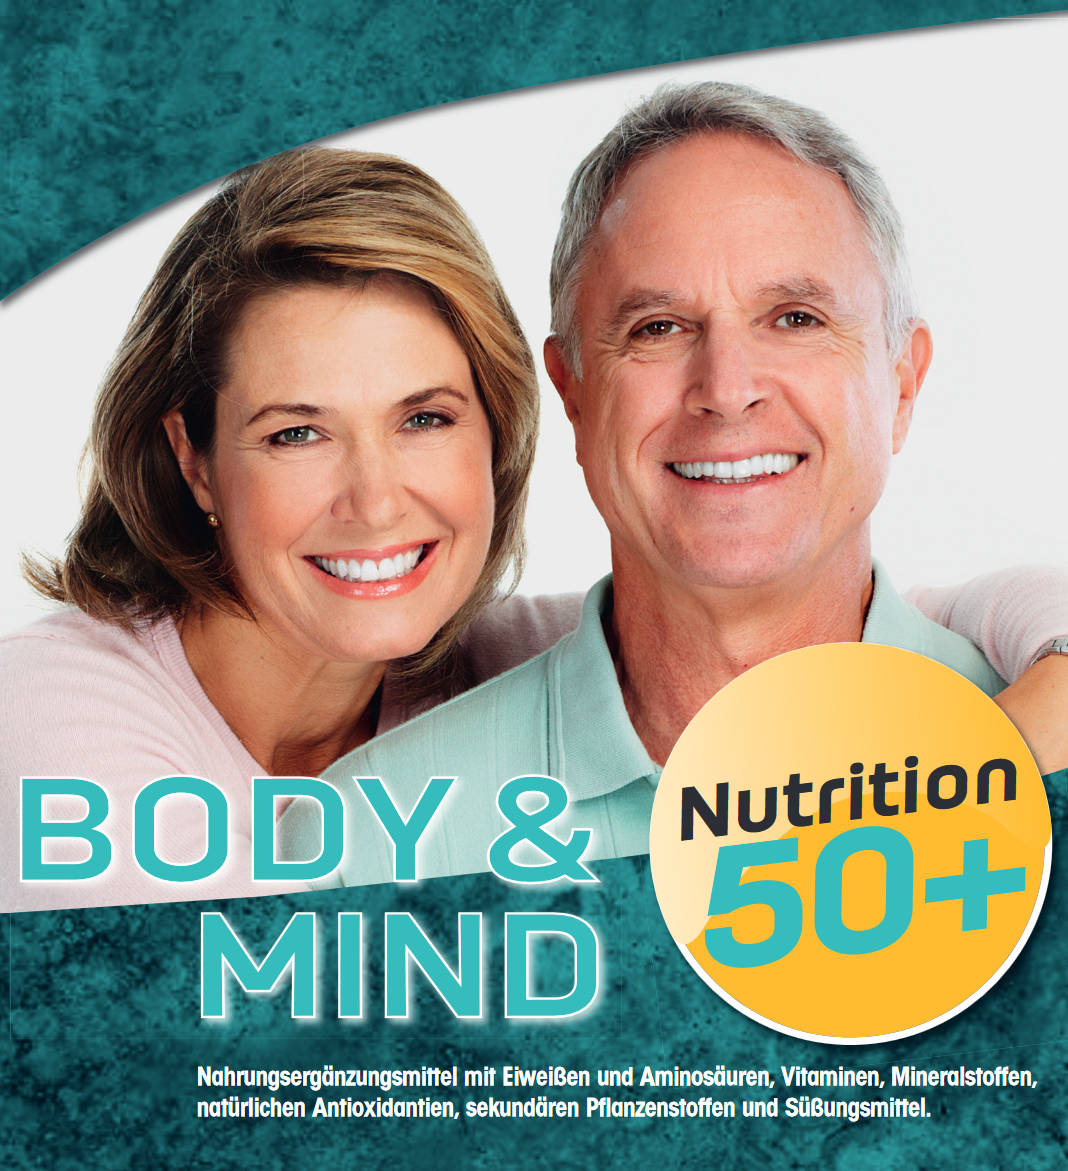 Body & Mind Nutrition 50+